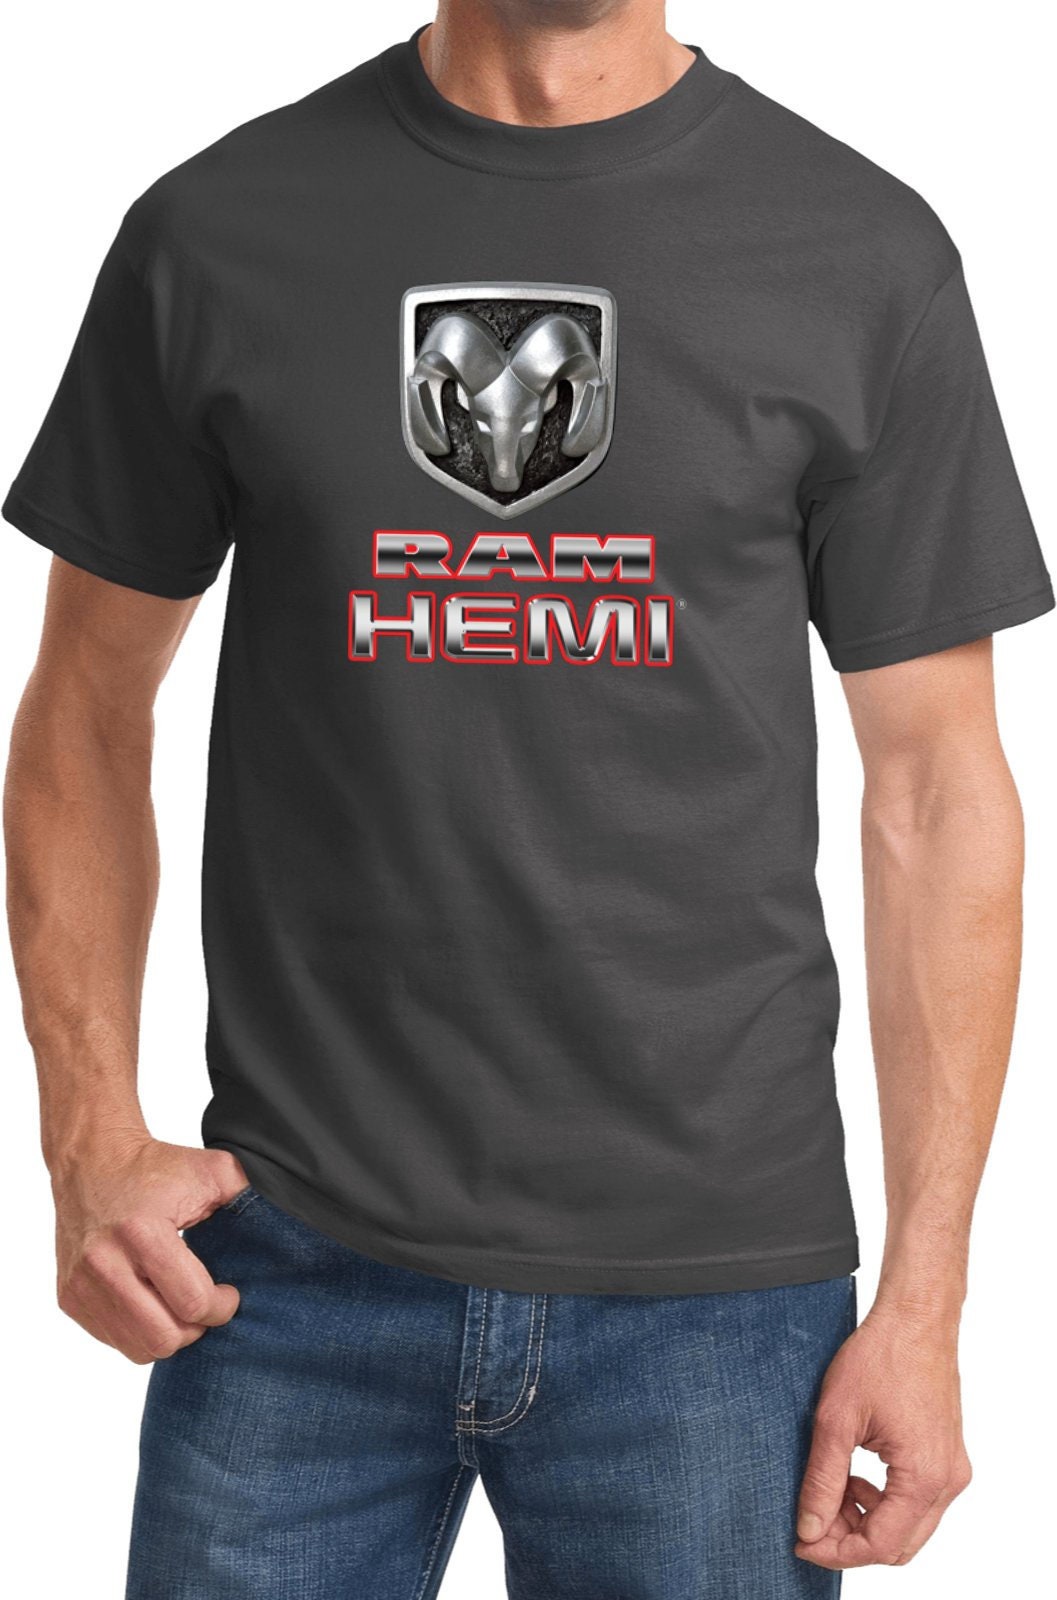 Ram Hemi Logo Adult Unisex Dodge Tee T-Shirt 20459Hd2-Pc61